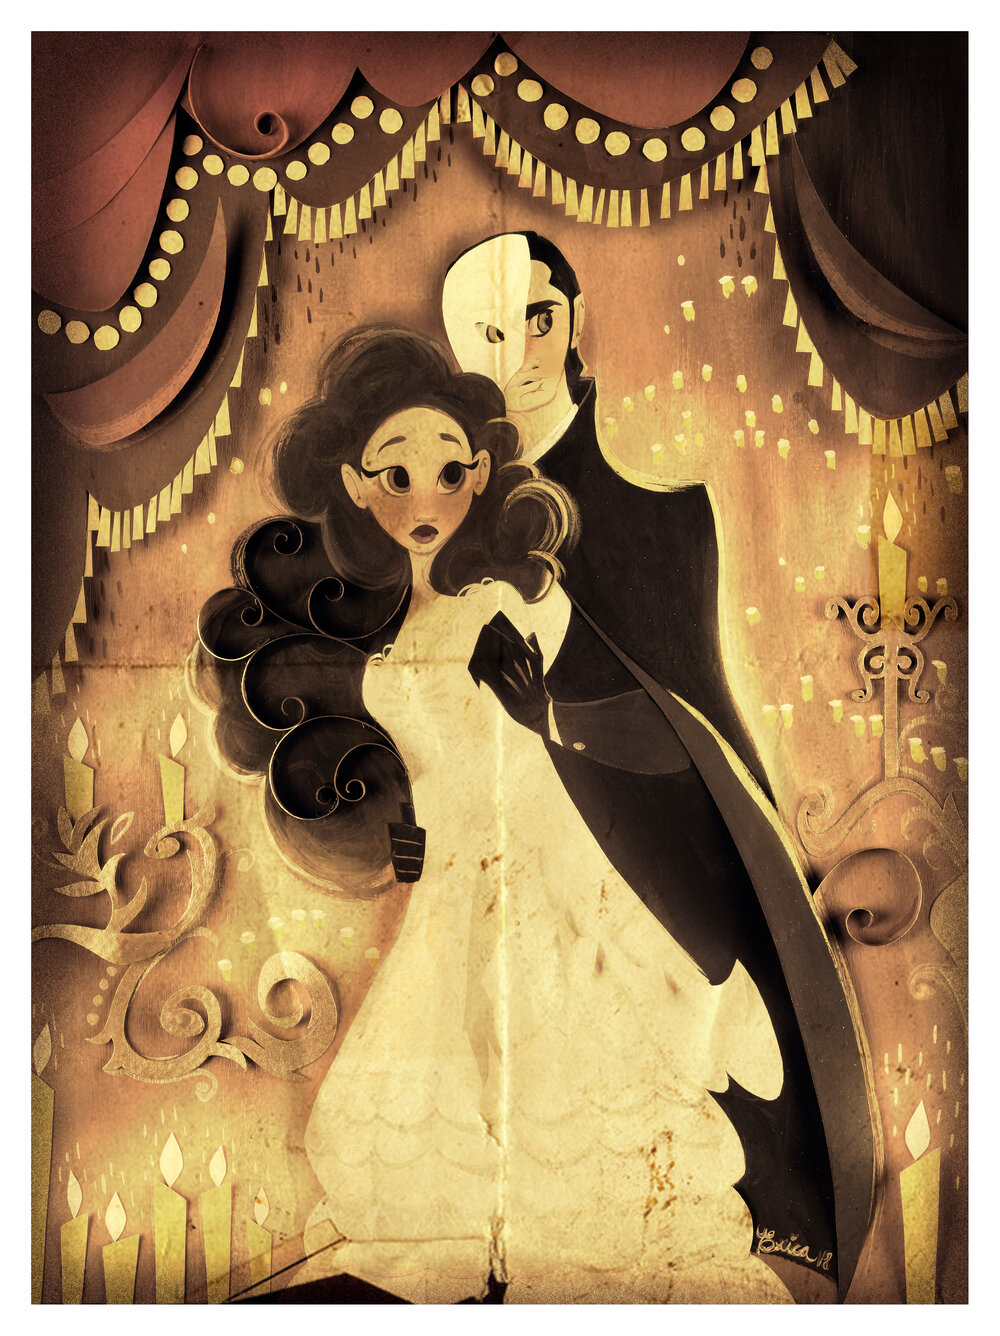 phantom of the opera painting